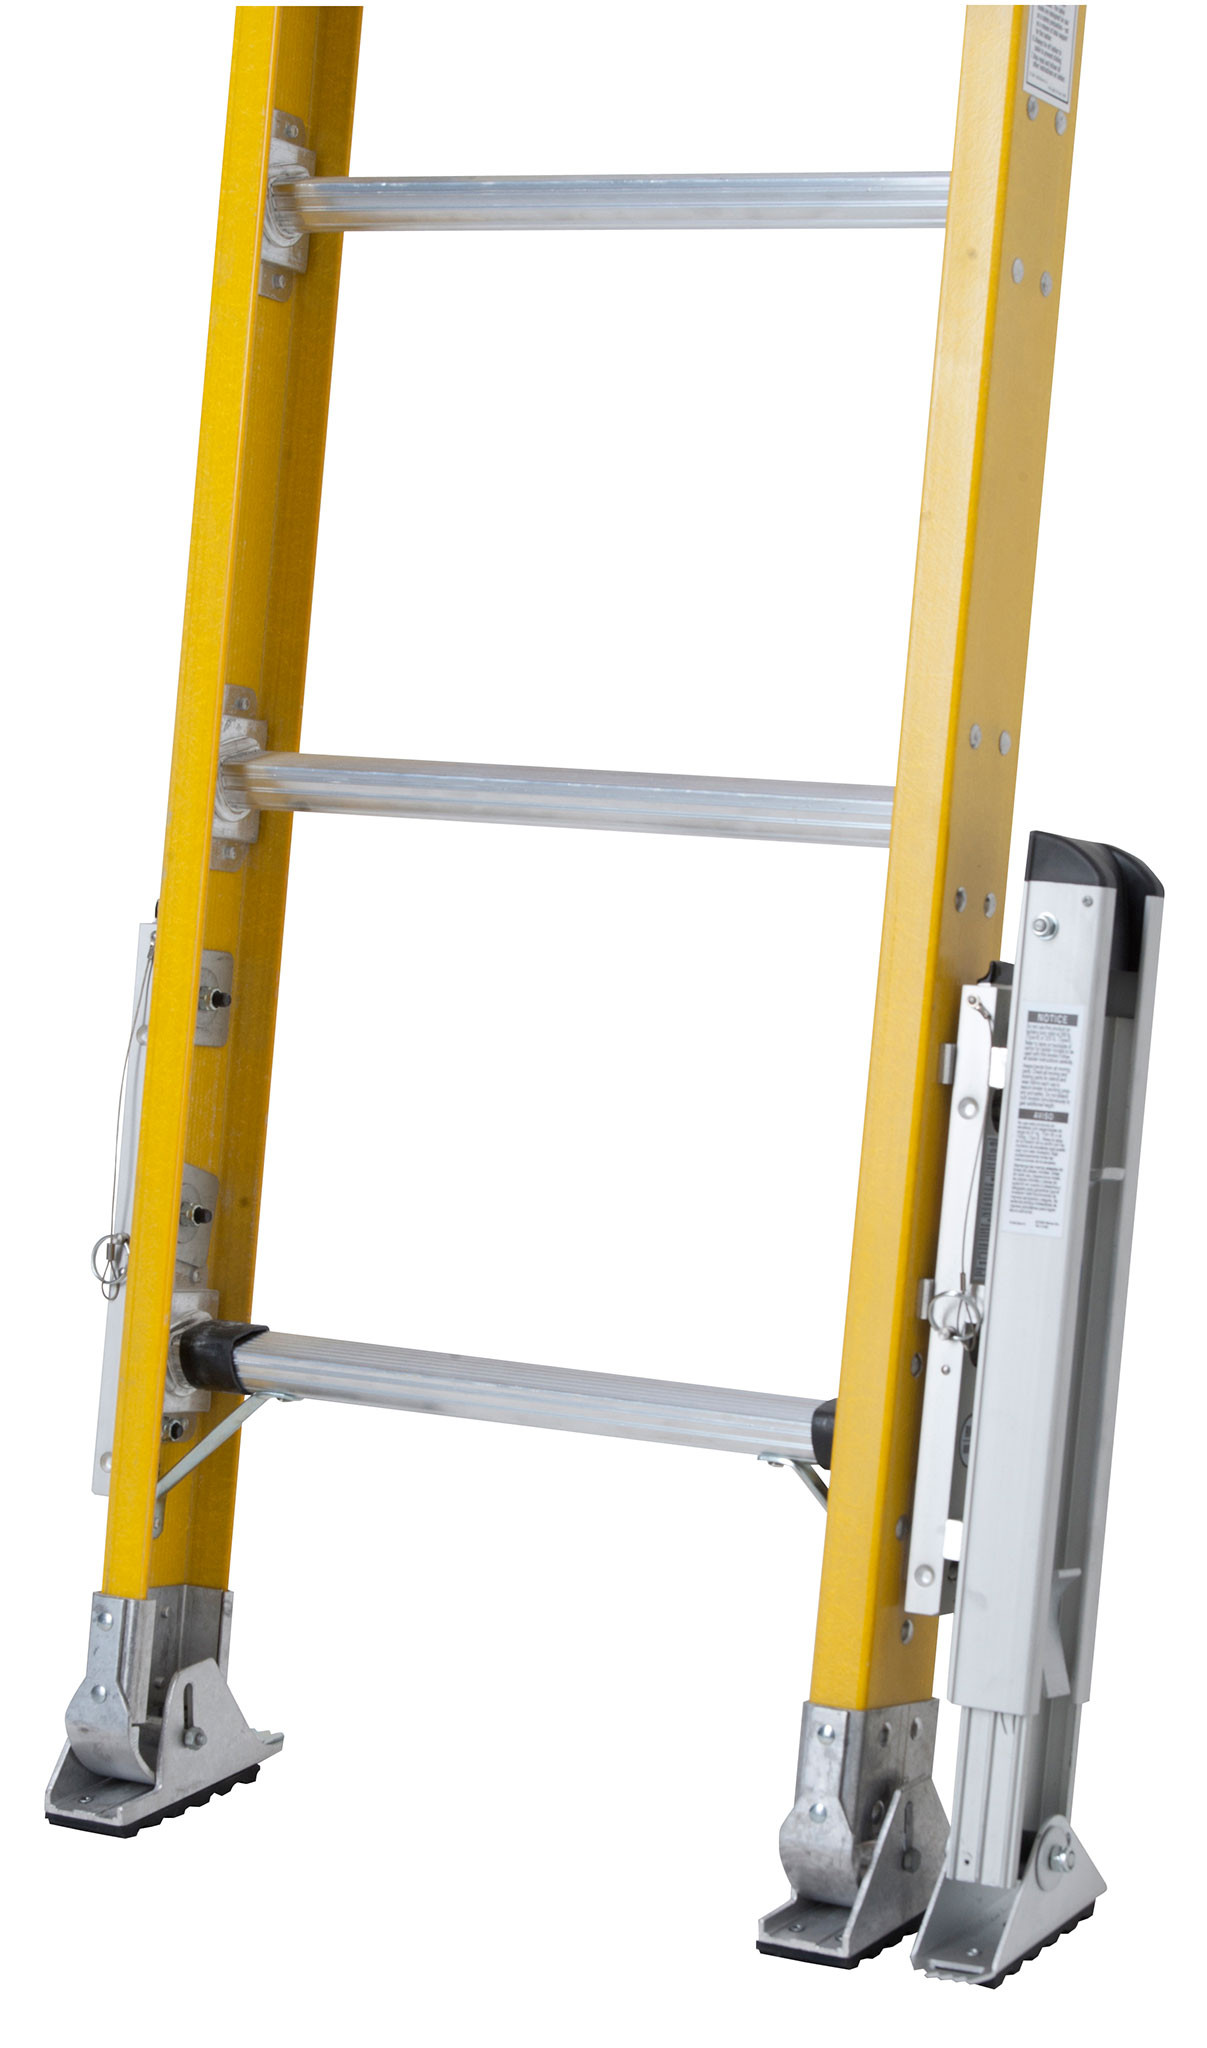 Werner PK70-1 Ladder Leveler with 2-Base Unit Attachments for sale online 